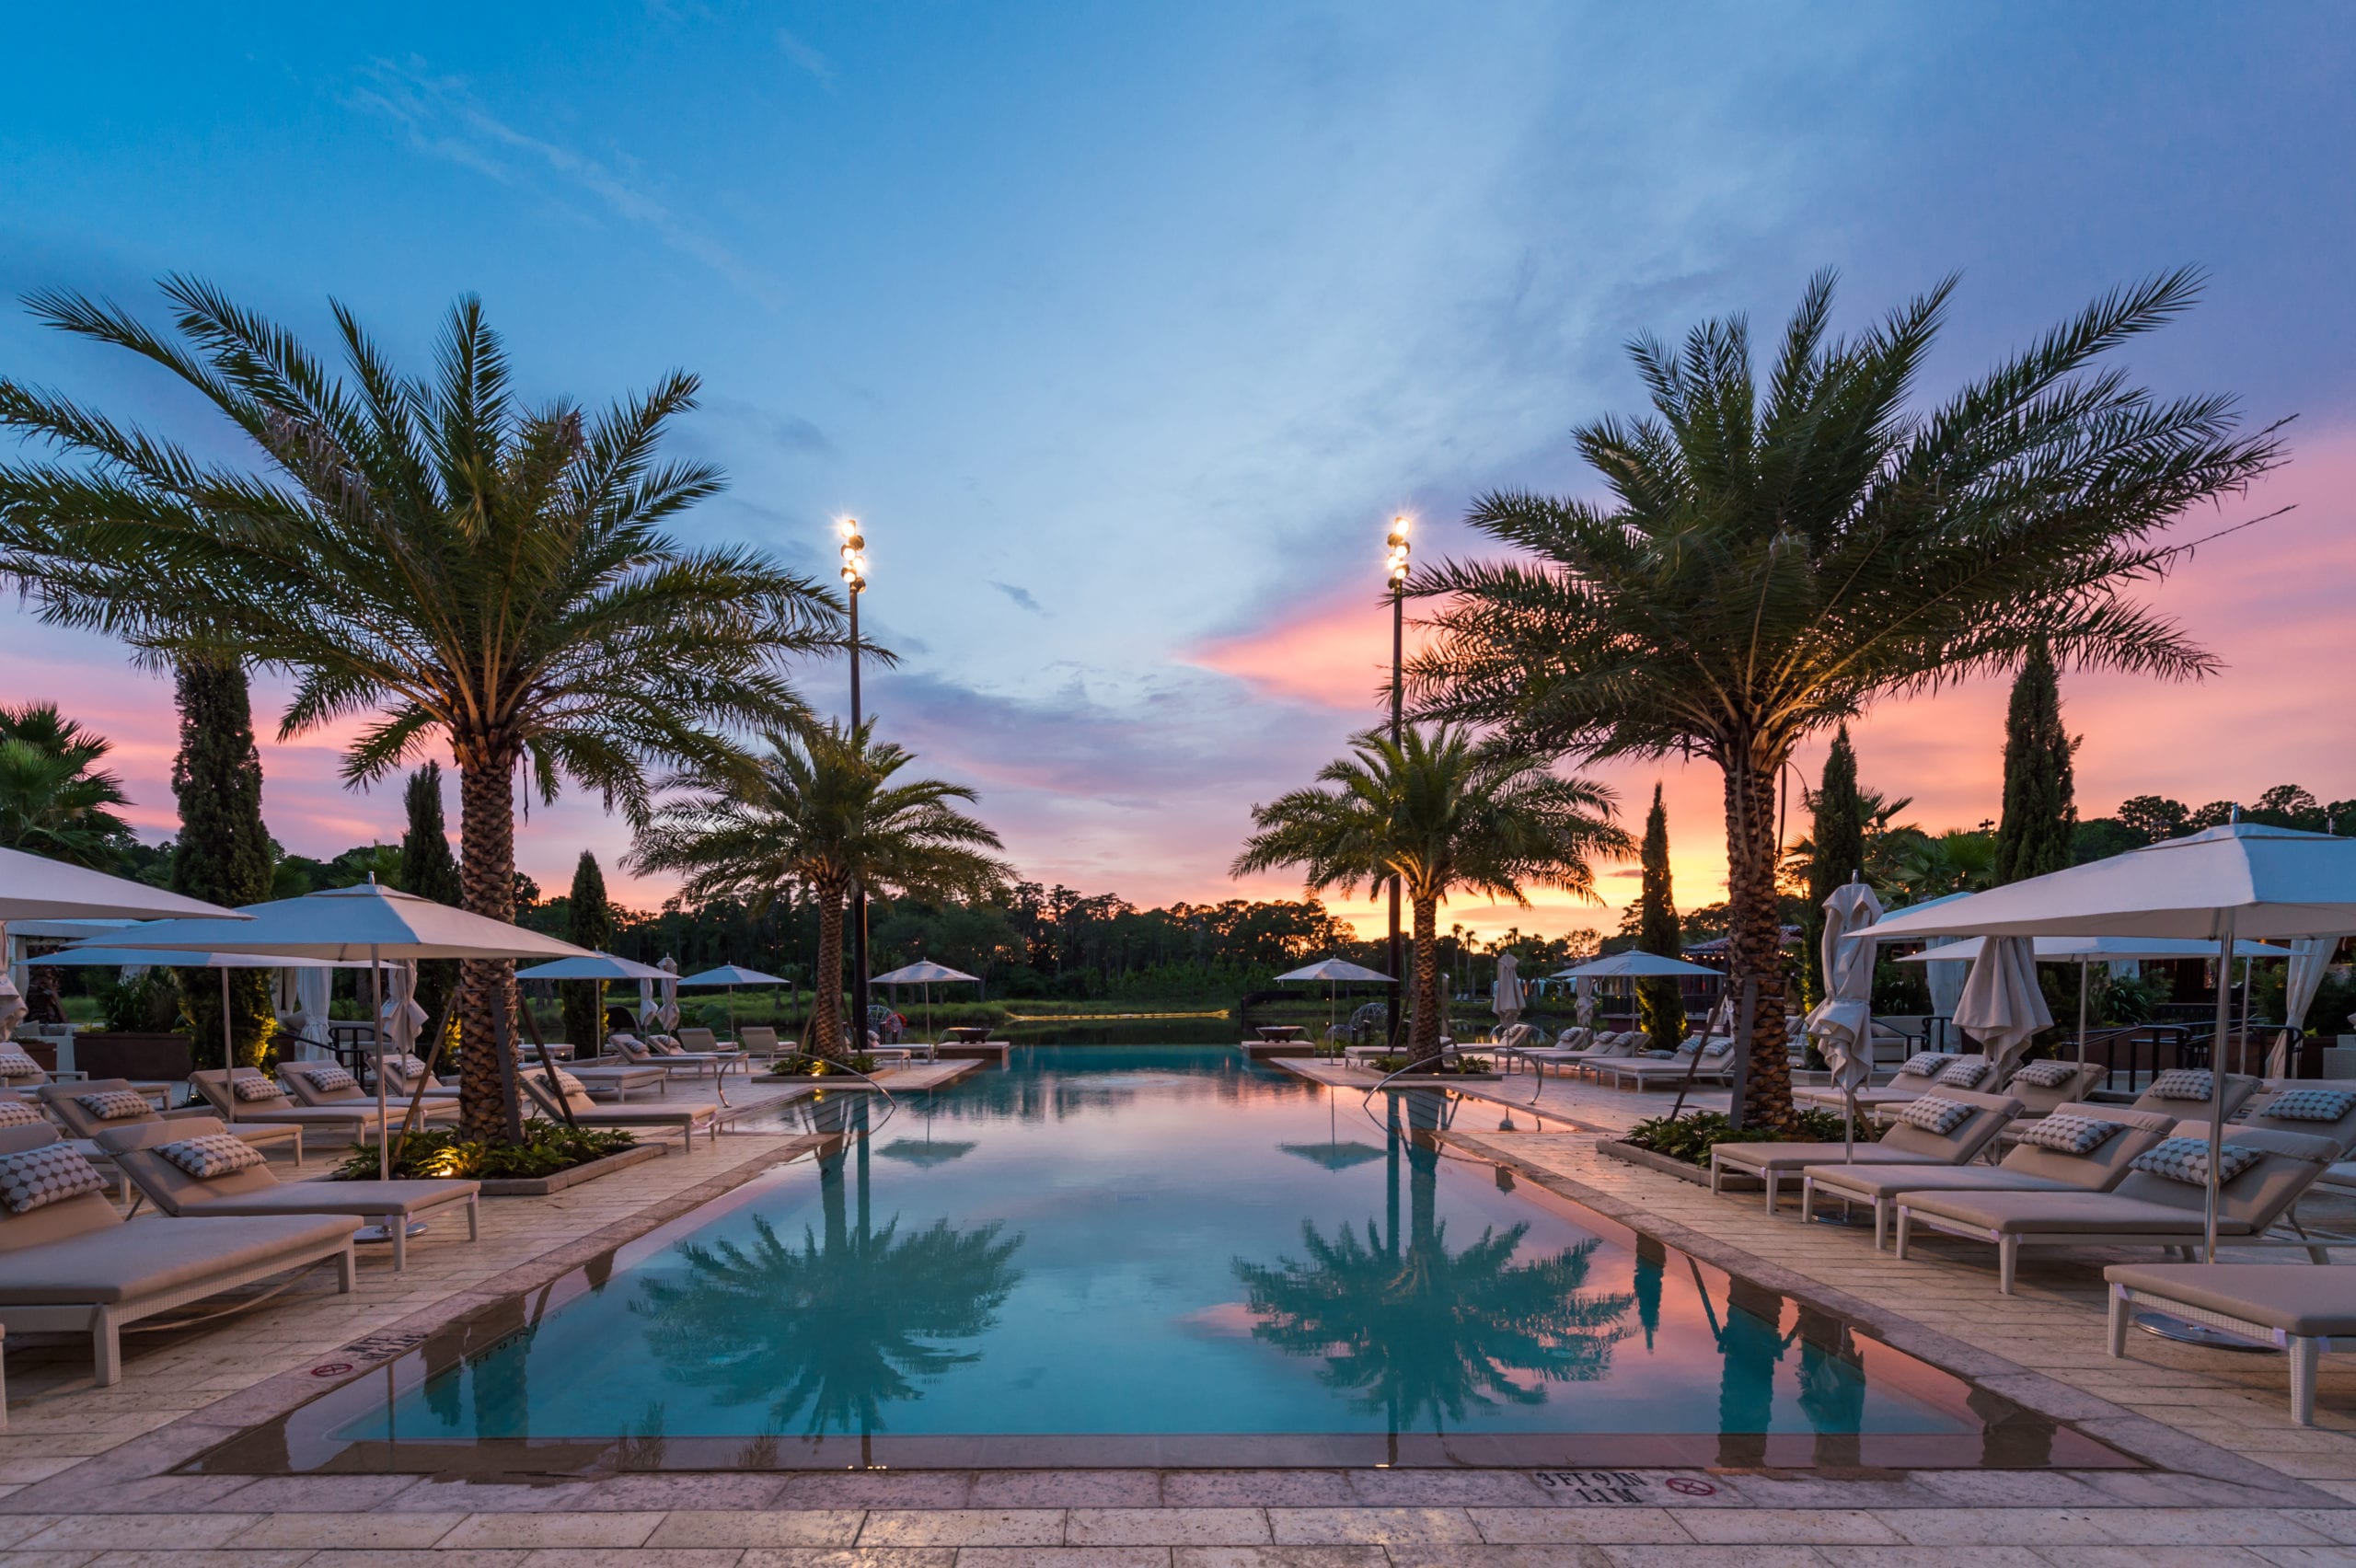 IU C&I Studios Portfolio Four Seasons Pool area with lounge furniture and palm trees along with pool at dusk